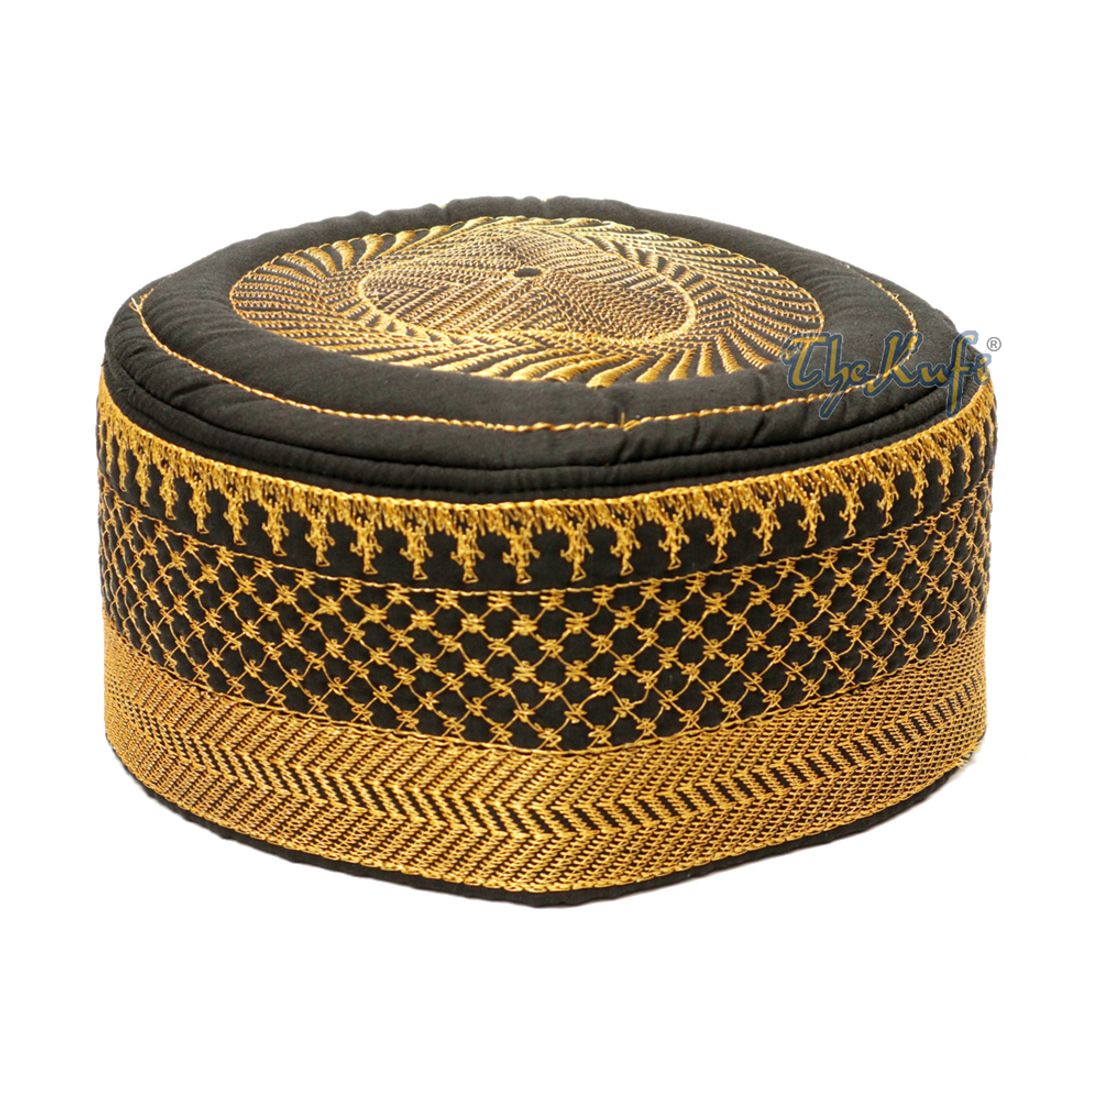 Black Kufi Hat with Gold Embroidery – African-style Metallic Thread Padded
Semi-stiff Prayer Cap Topi